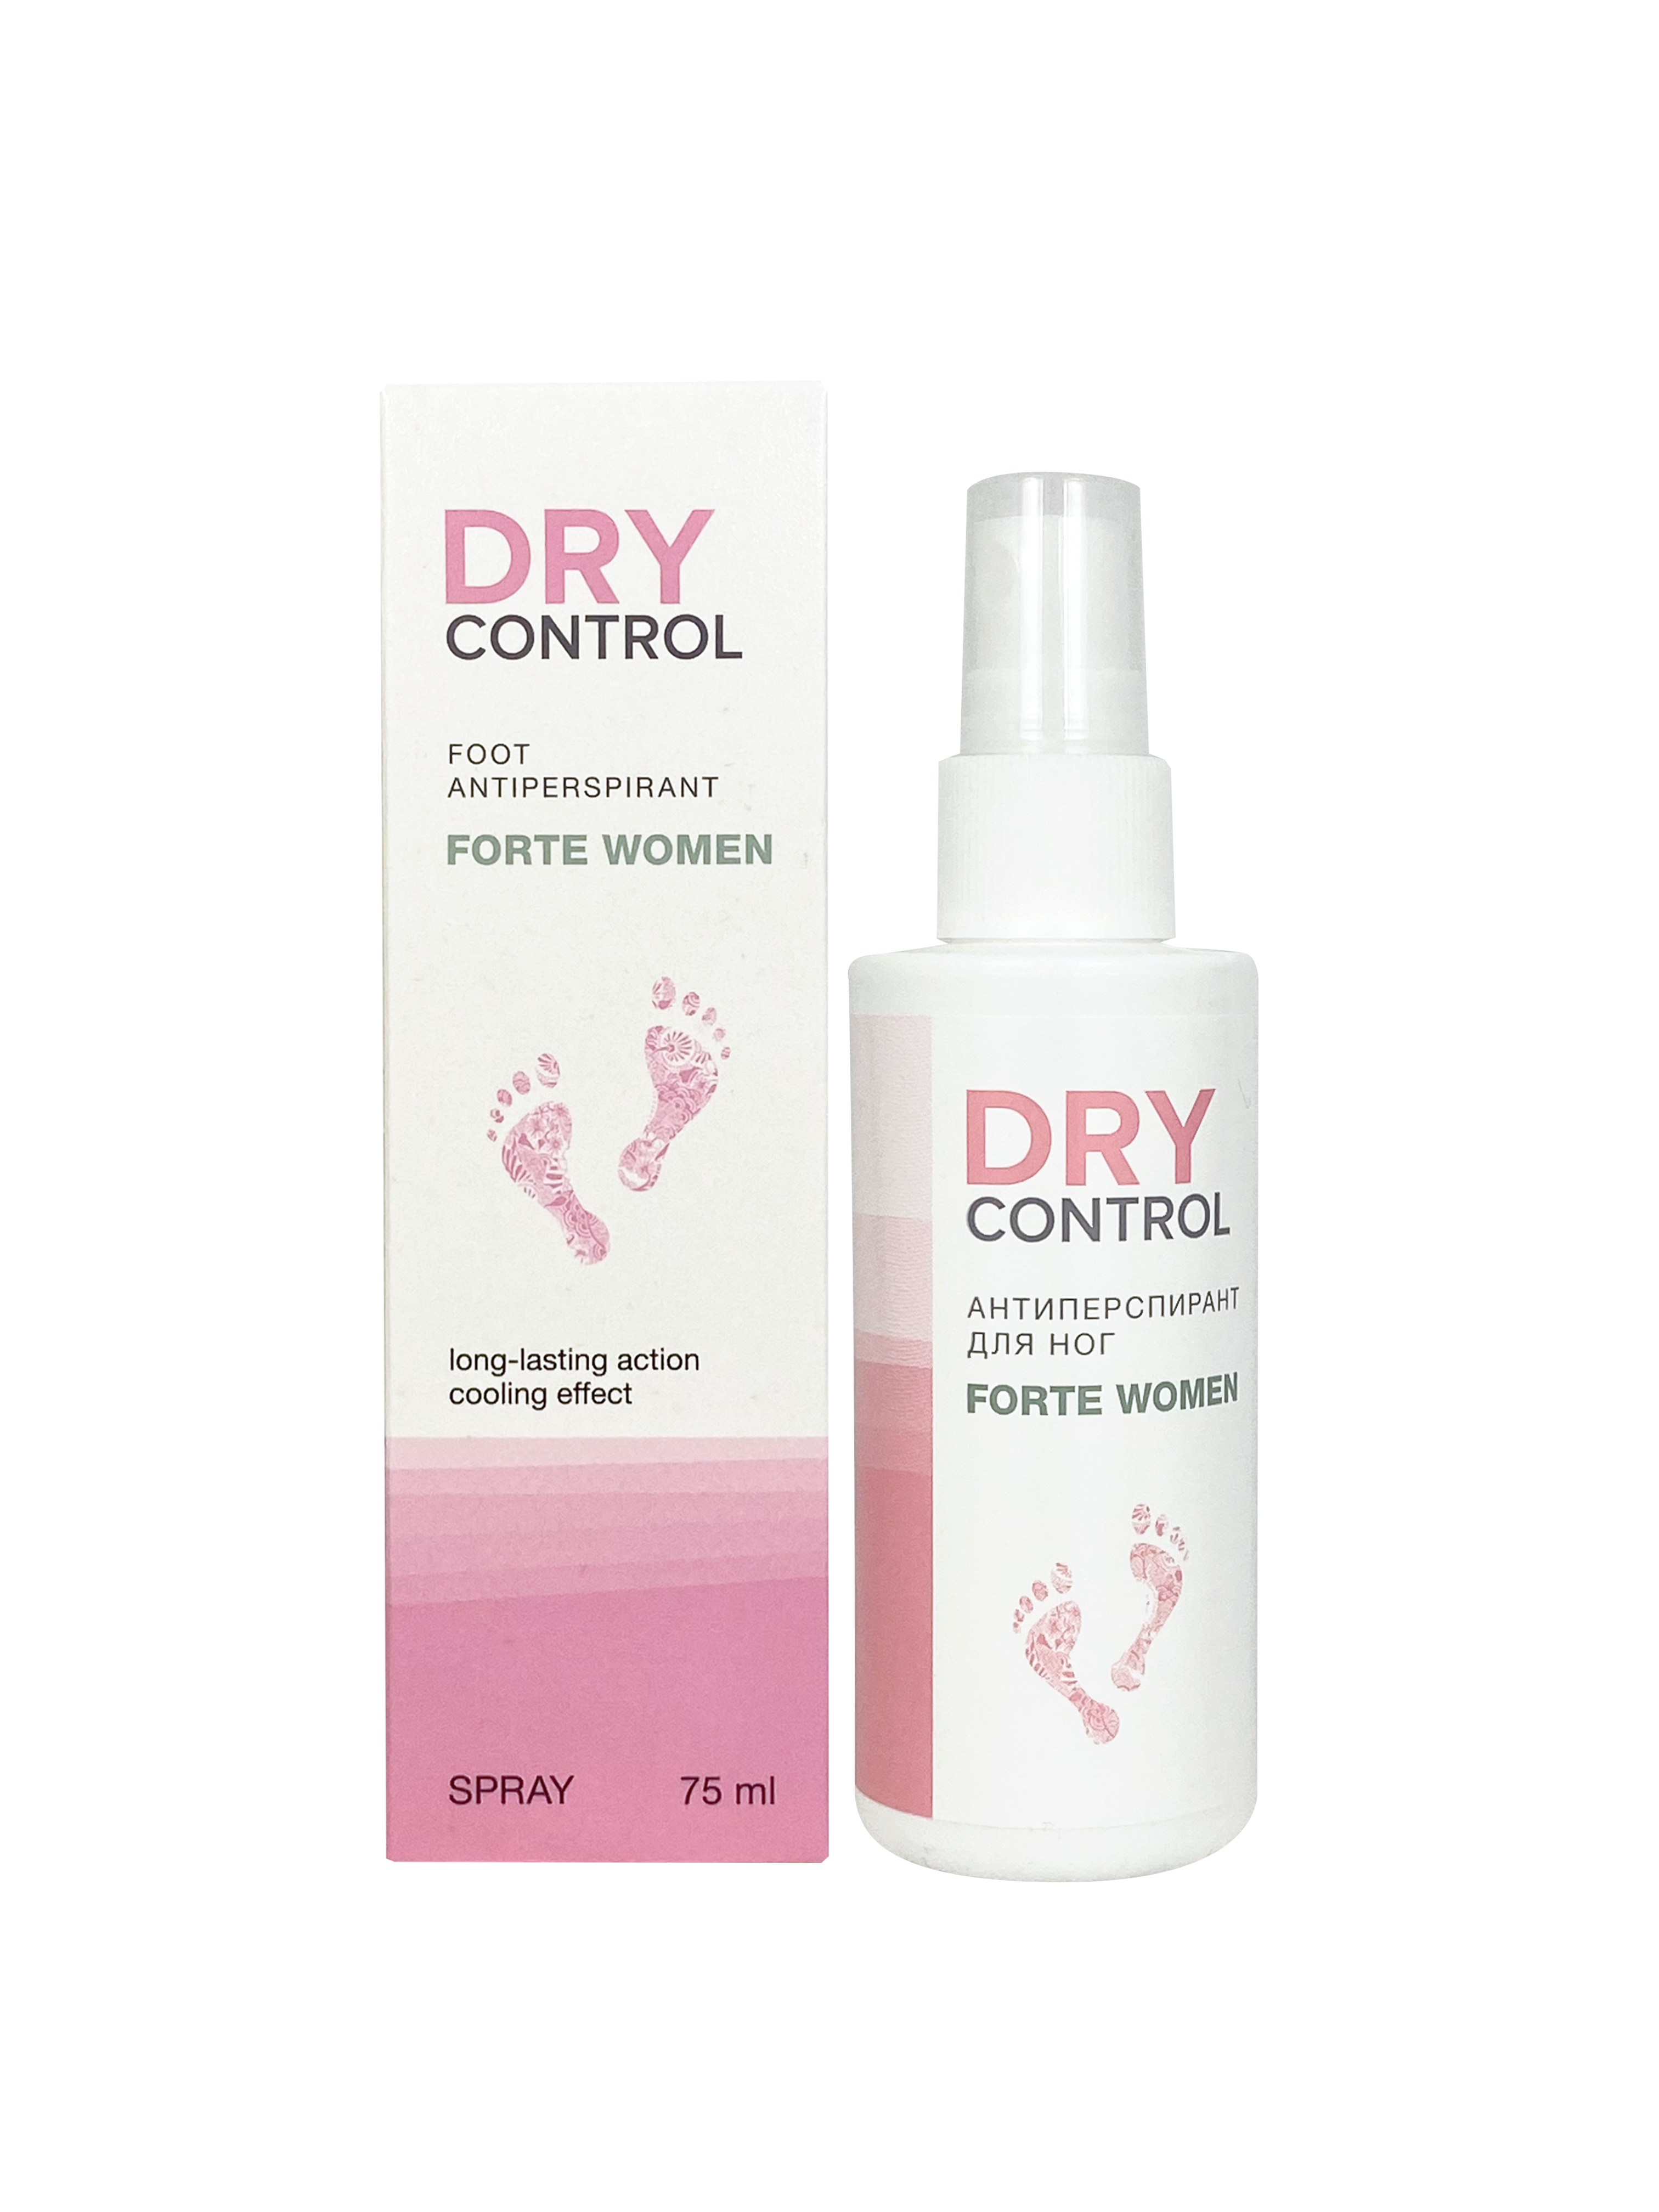 Антиперспирант Drycontrol Forte Women для ног drycontrol антиперспирант для ног forte women 75 0